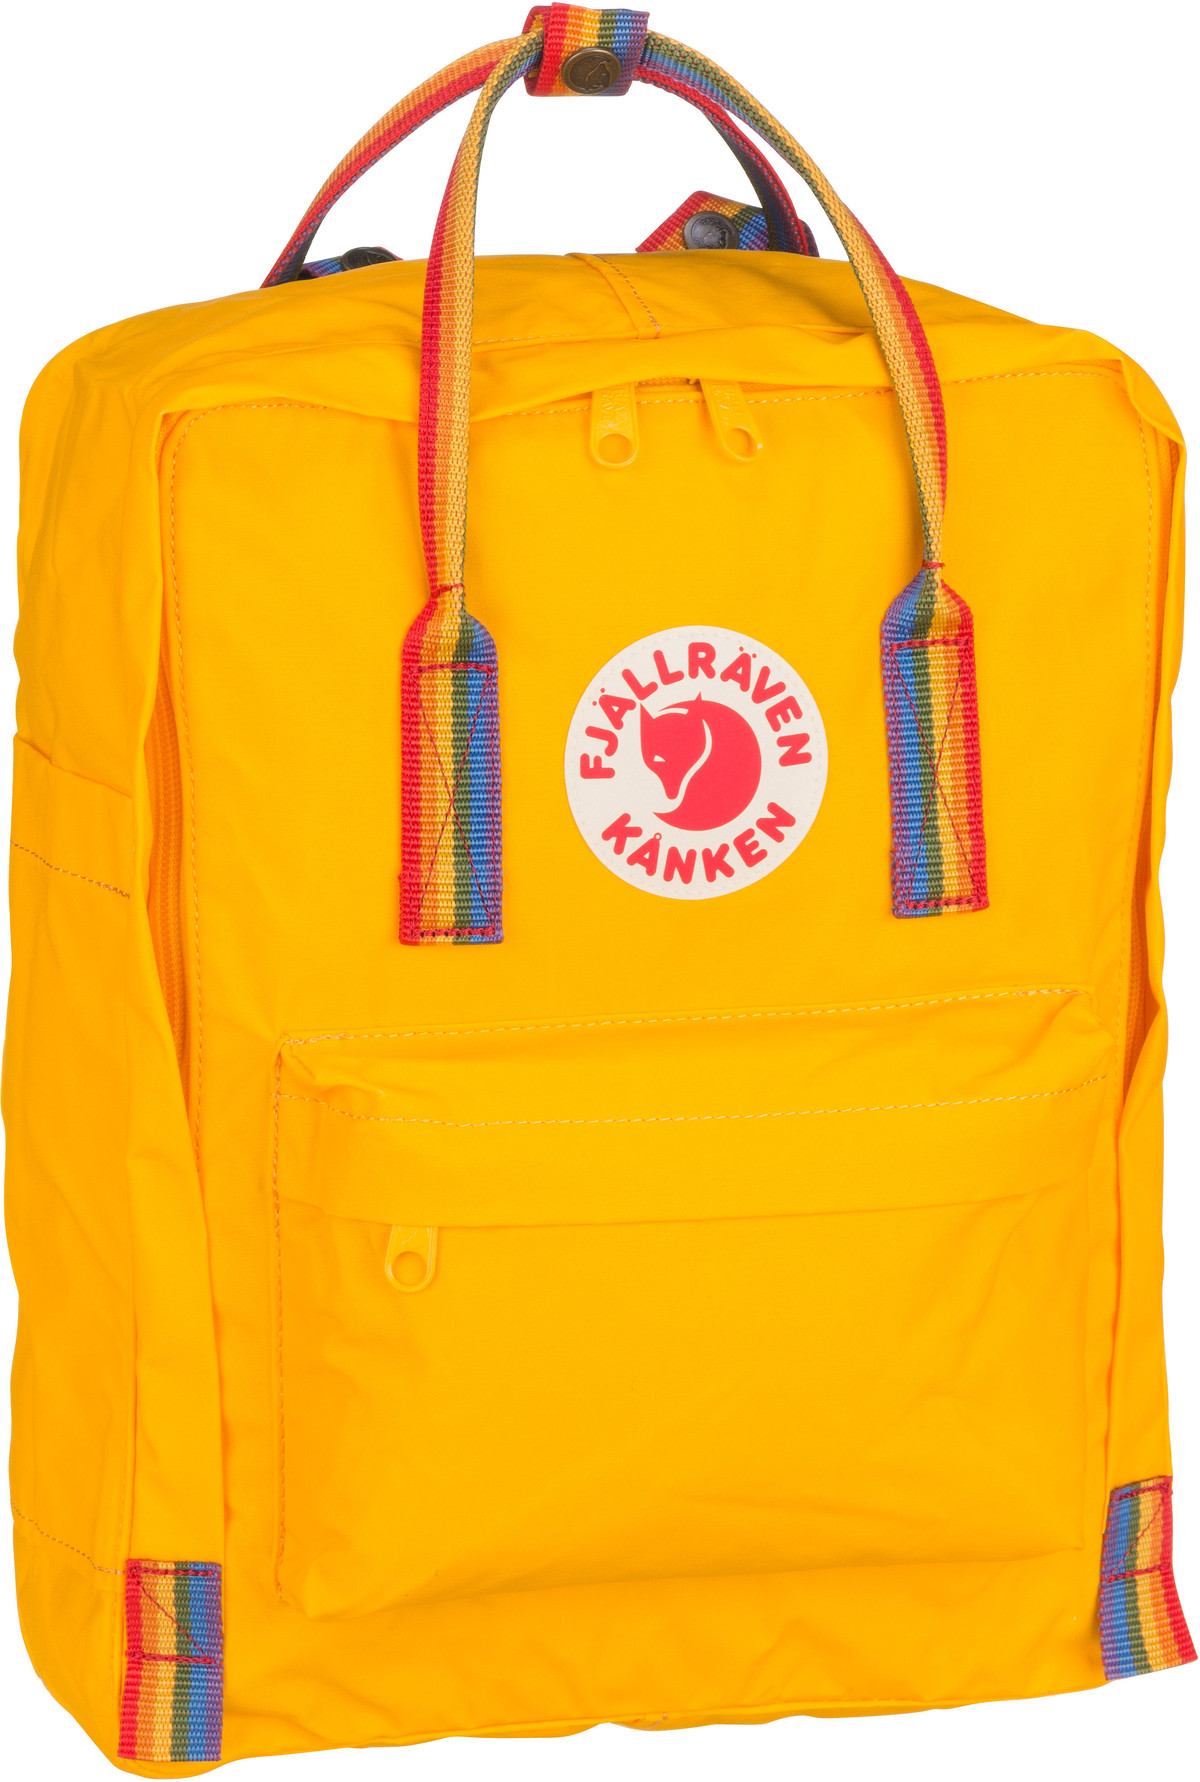 Fjällräven Kanken Rainbow  in Gelb (16 Liter), Rucksack / Backpack